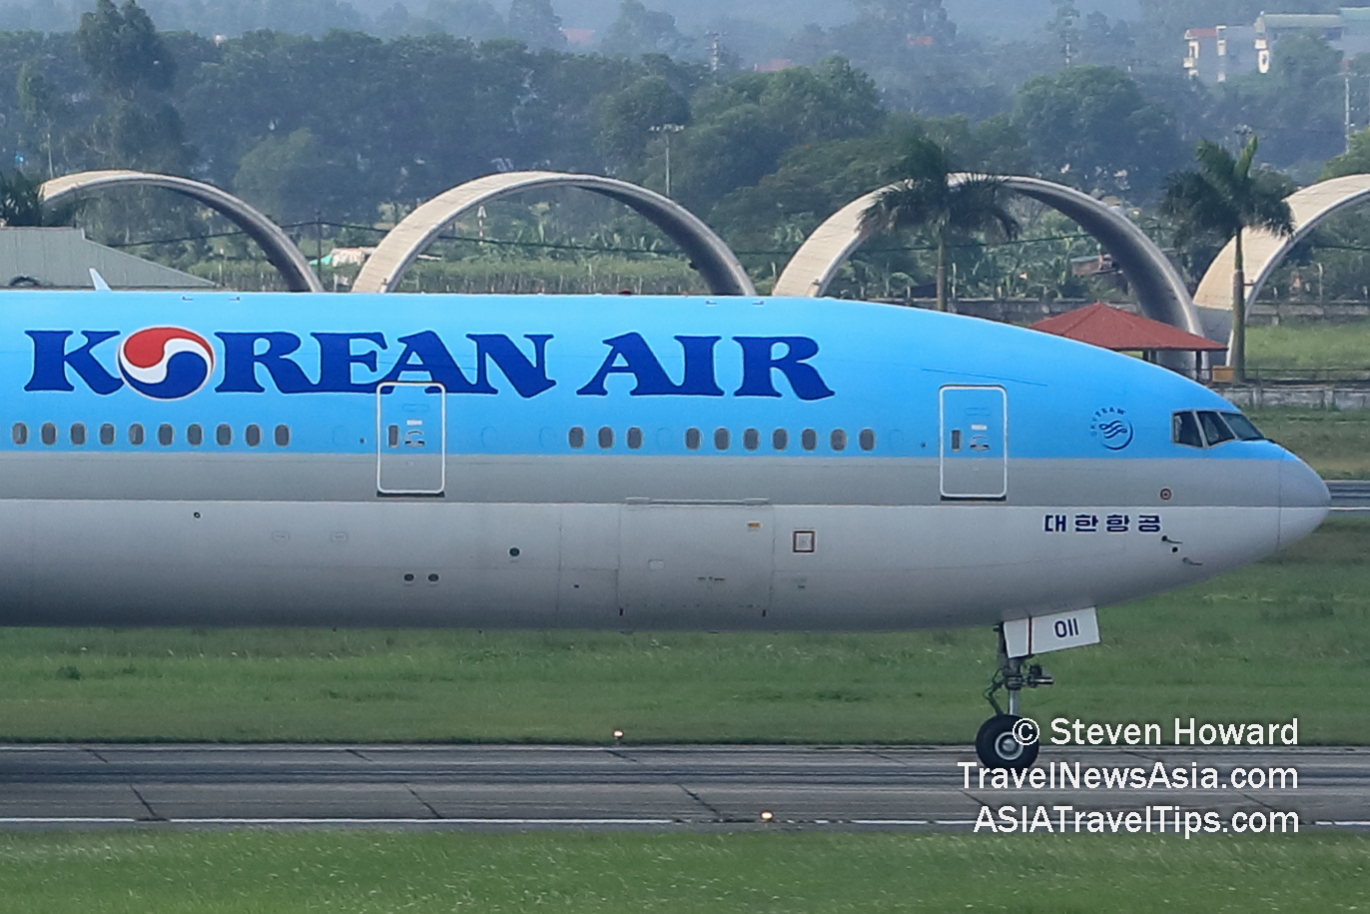 Korean Air B777-300ER reg: HL8011. Picture by Steven Howard of TravelNewsAsia.com Click to enlarge.